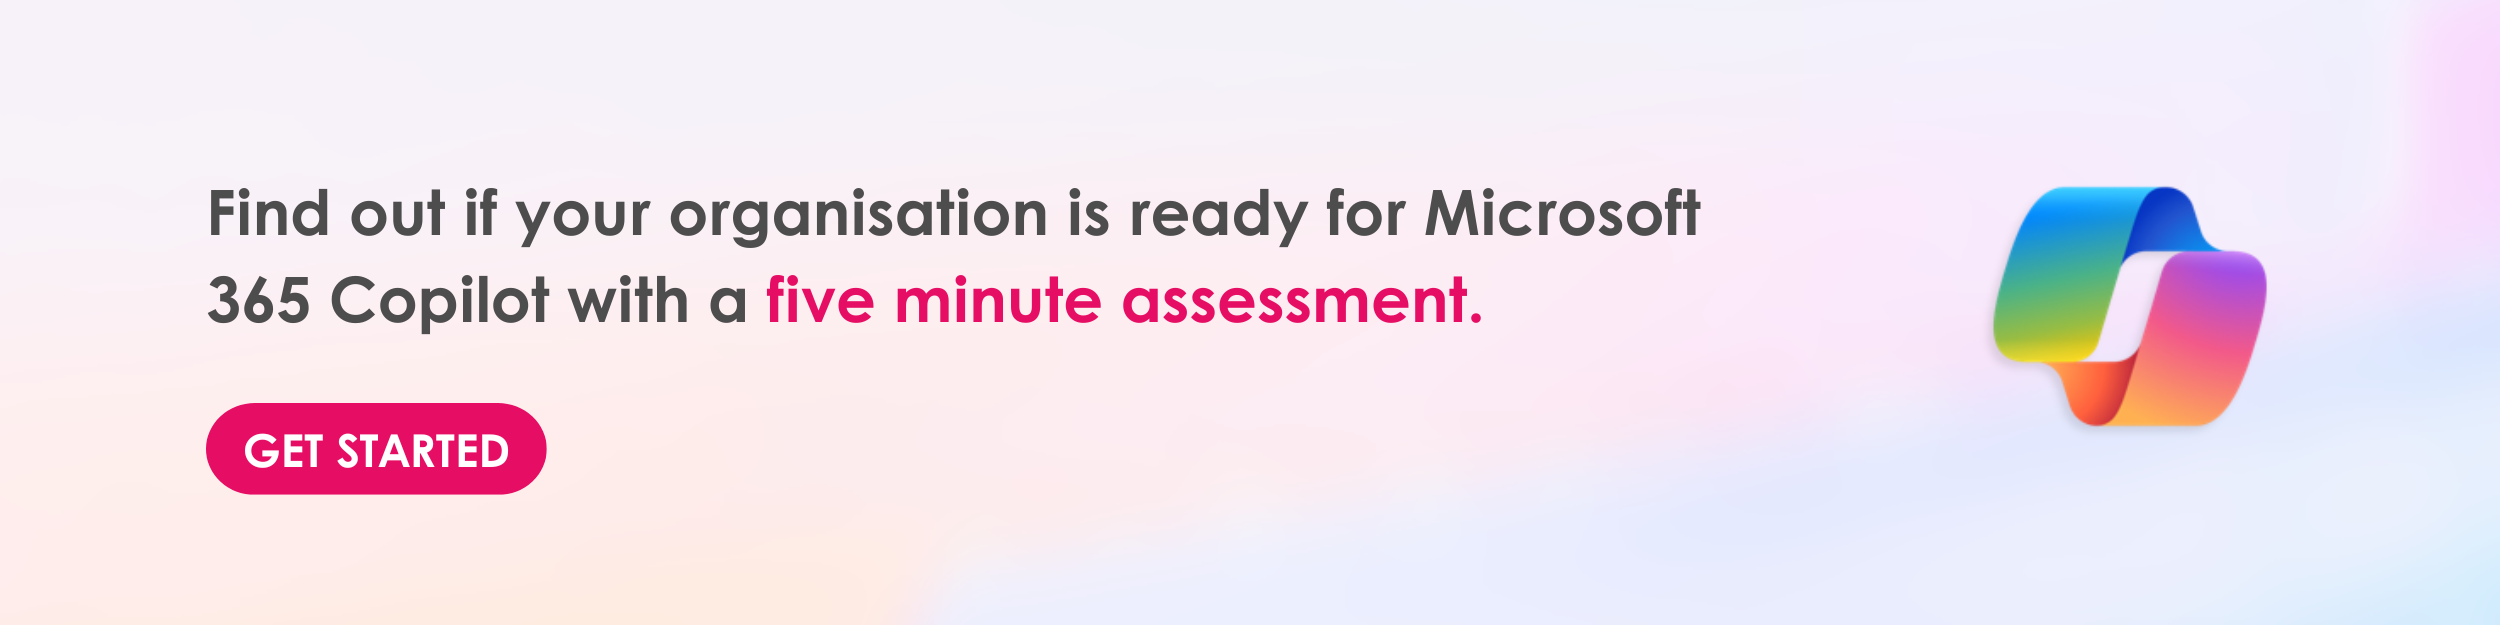 Microsoft 365 Copilot Readiness Assessment